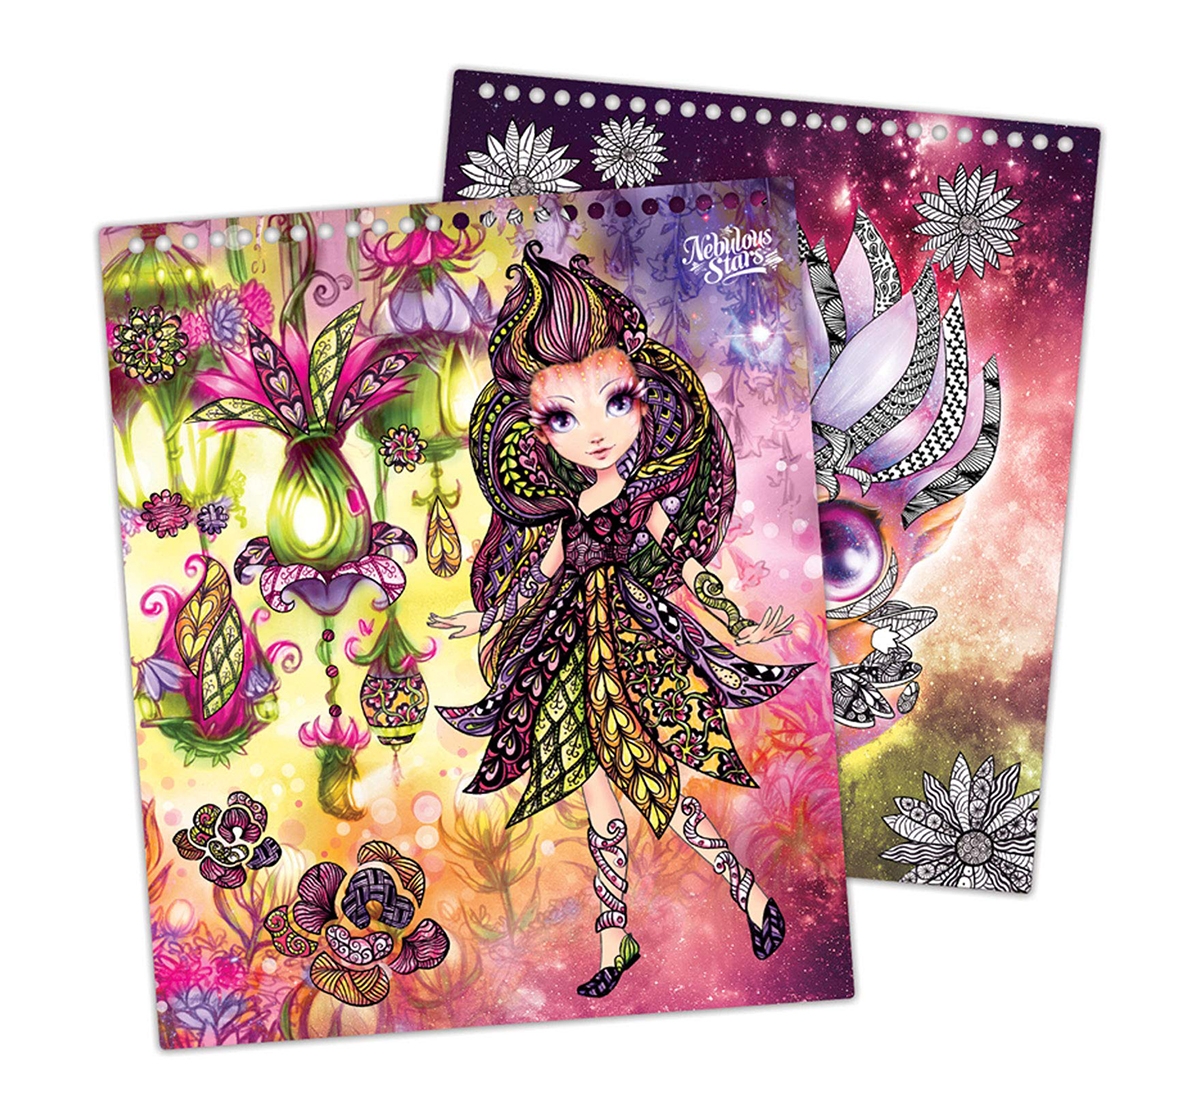 Nebulous Star | Nebulous Star - Creative Sketchbook - Petulia DIY Art & Craft Kits for Girls age 7Y+ 2